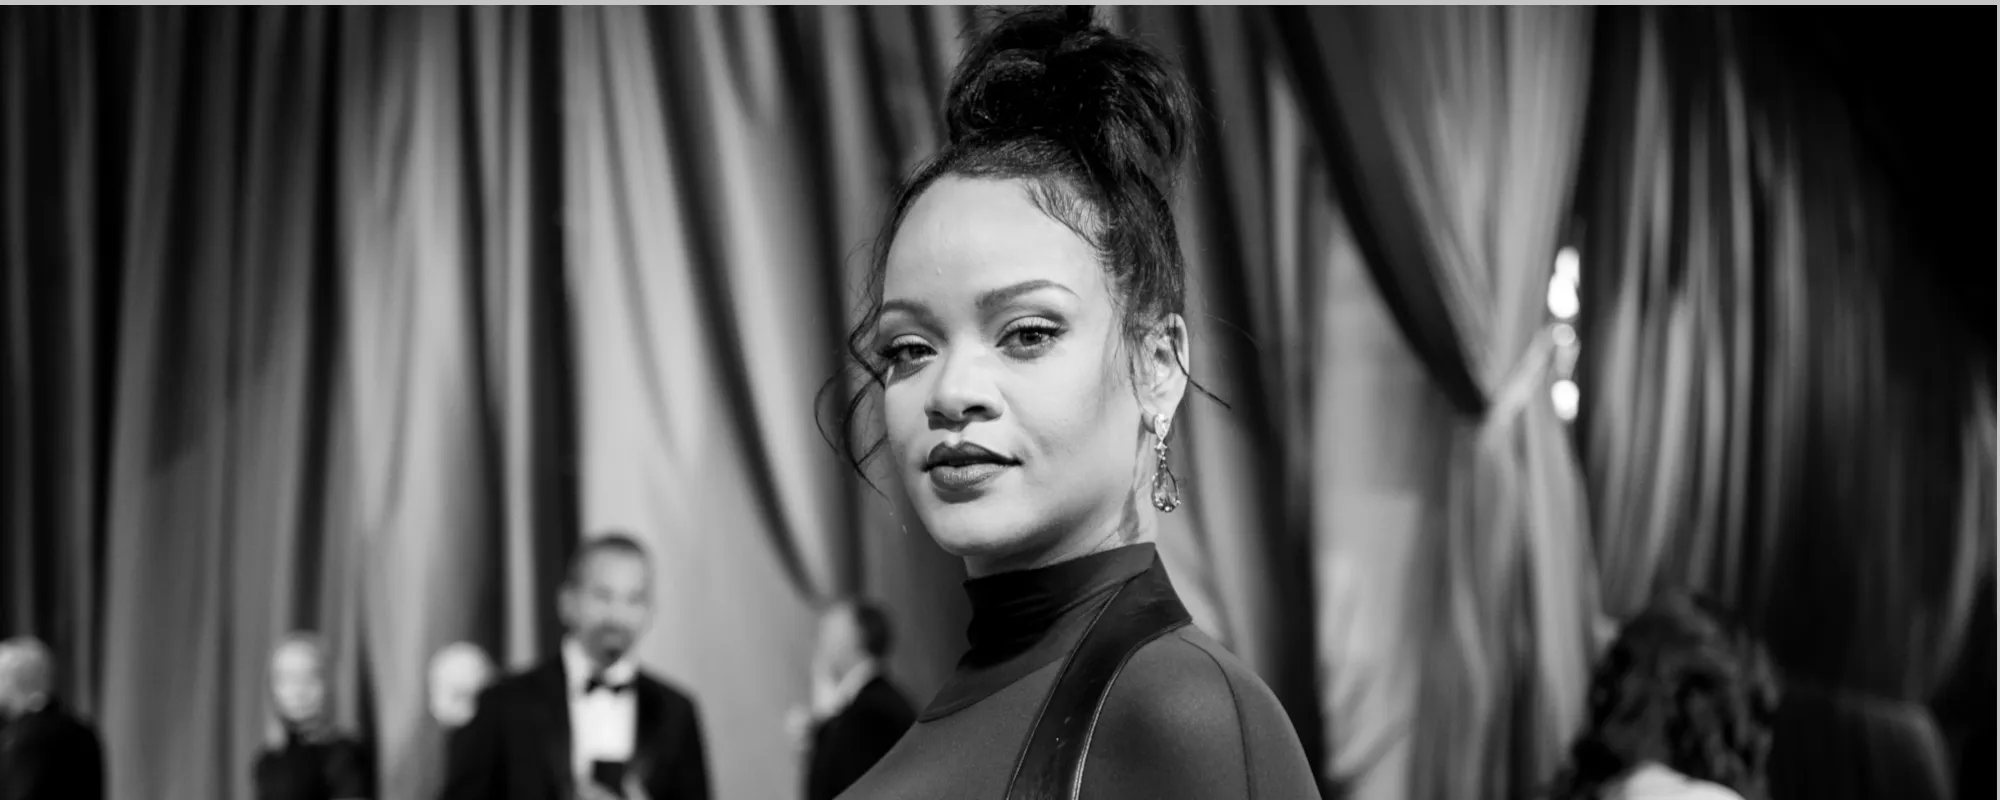 Rihanna Reacts to Career Milestone—1 Billion Spotify Streams, Nicki Minaj Offers Congratulations